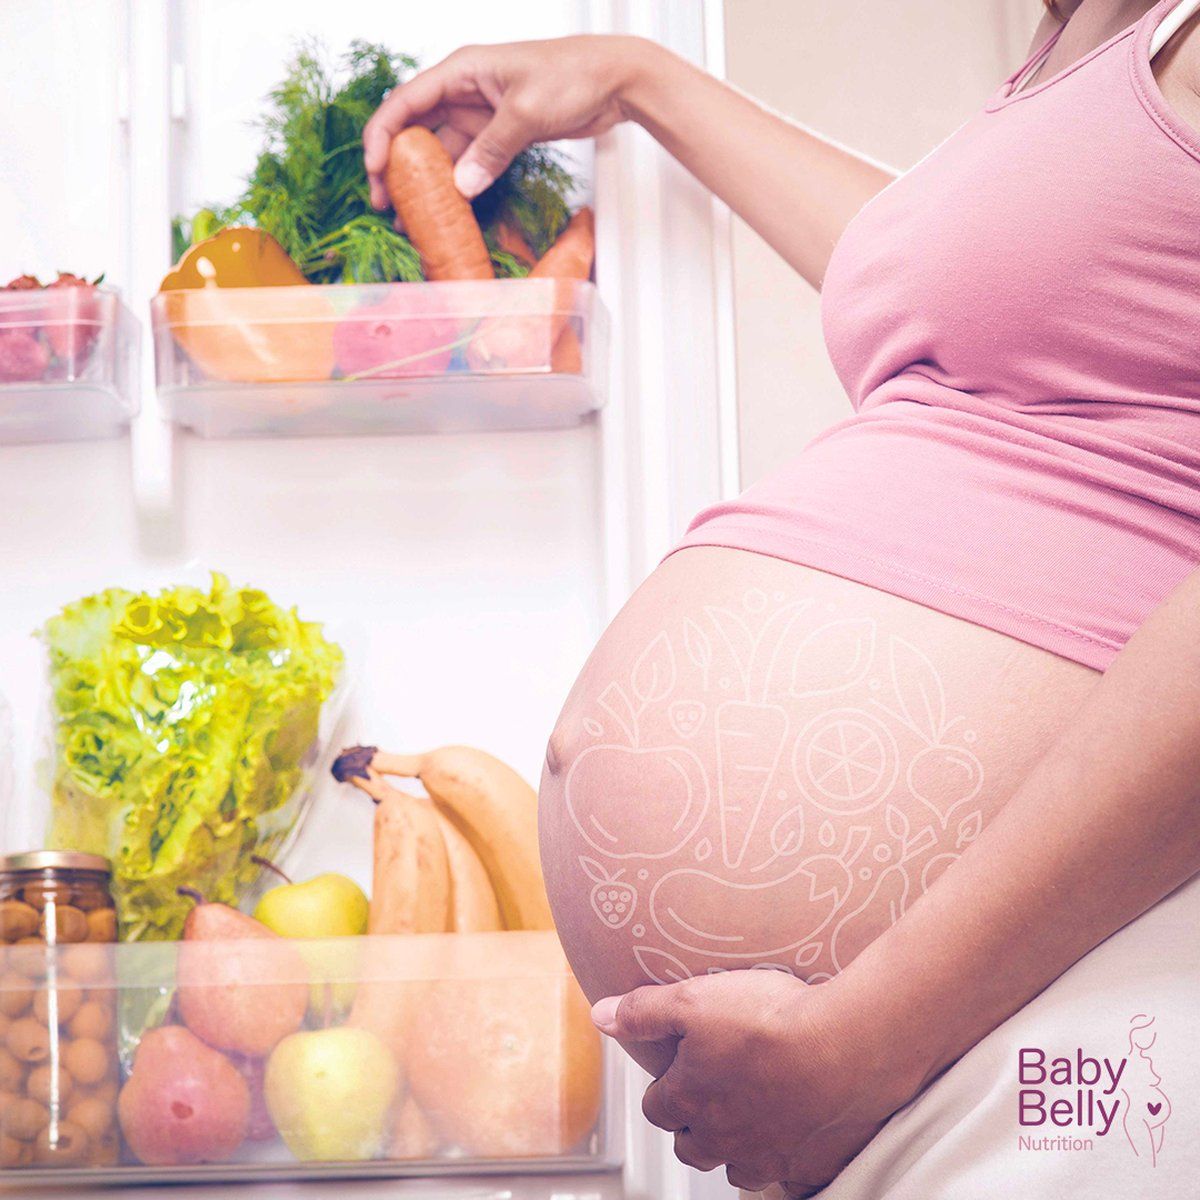 Baby's sense of taste already develops during pregnancy